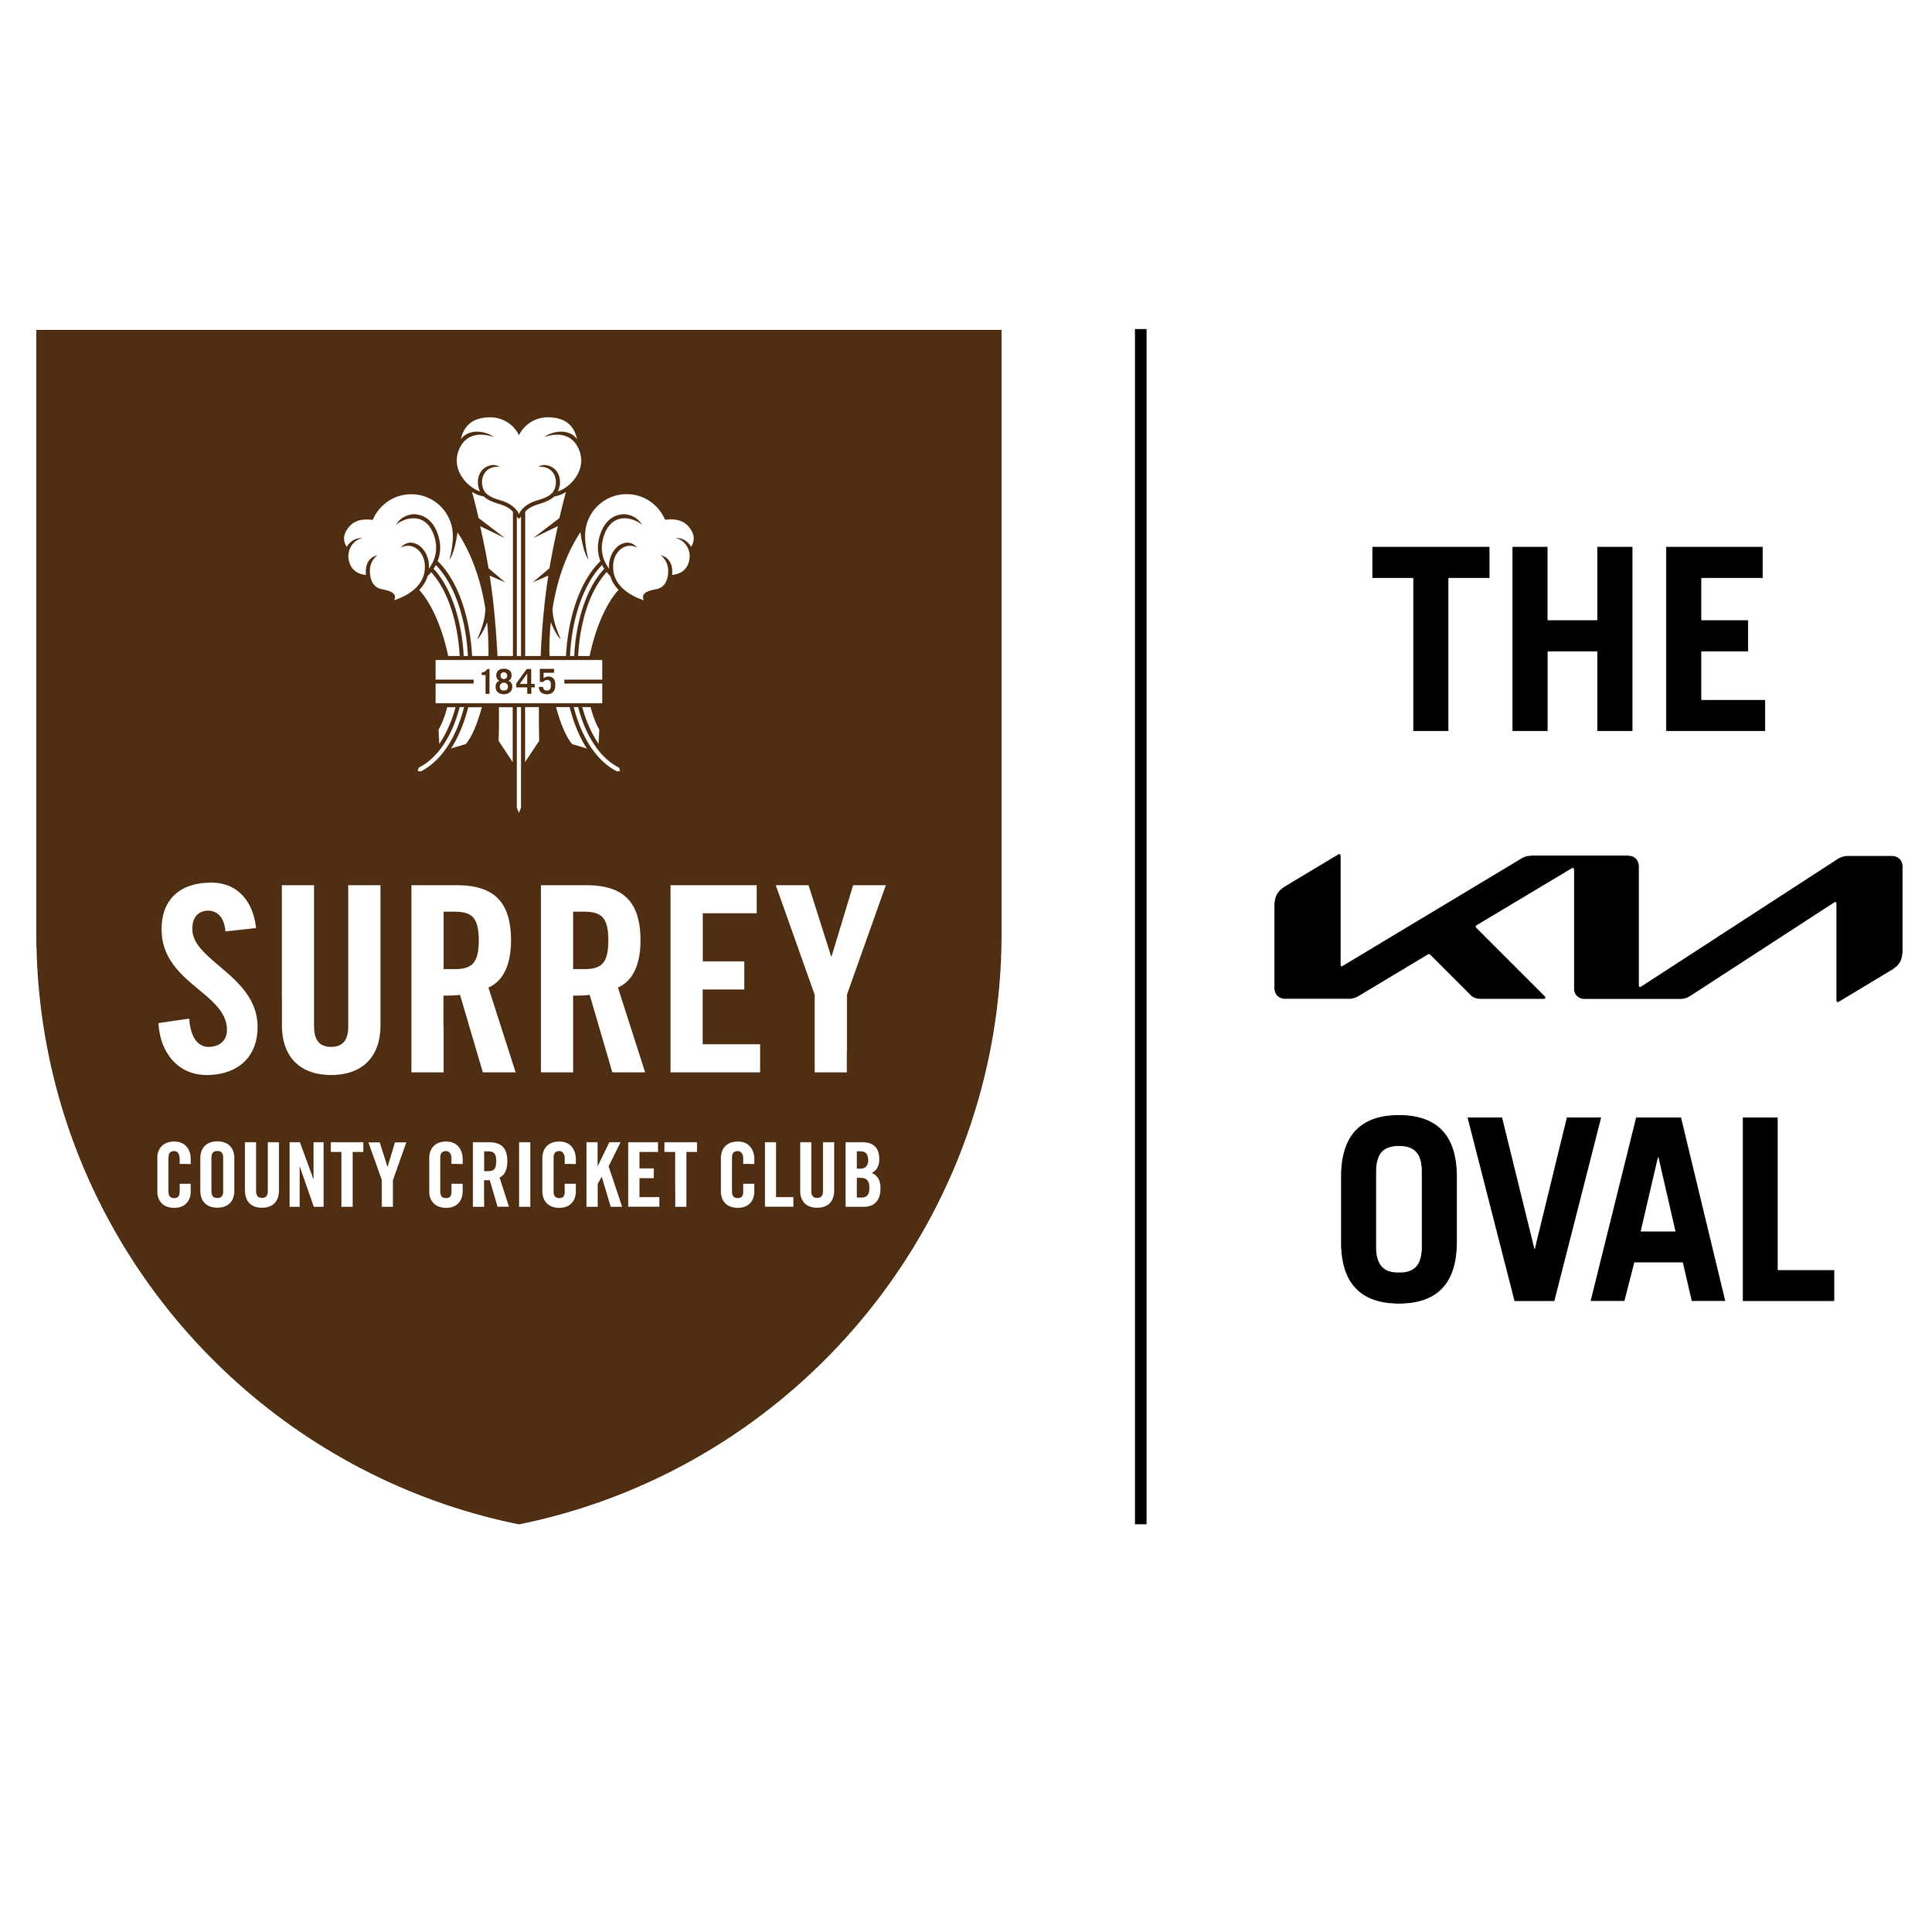 Surrey-Kia-Oval-Logo-2.png